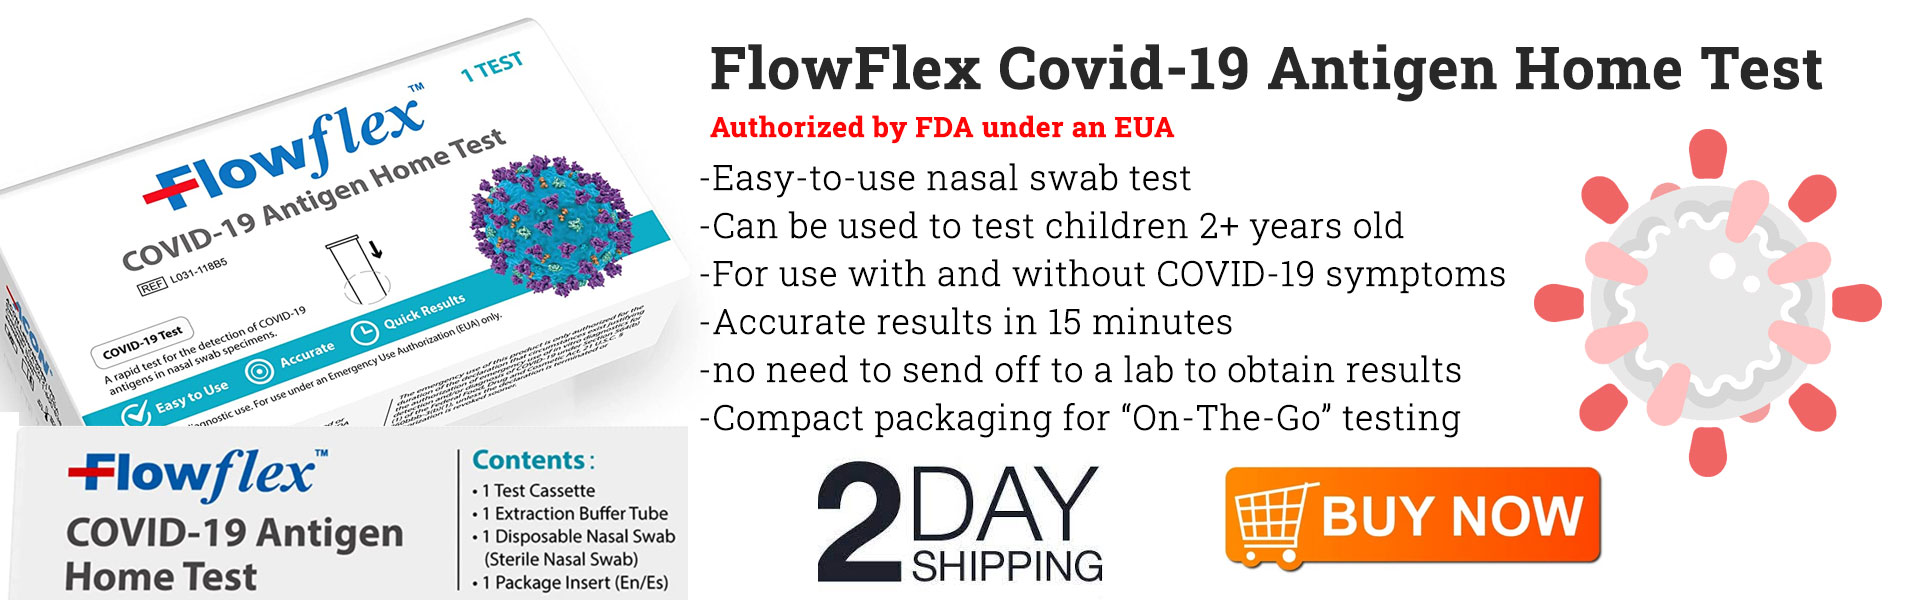 FlowFlex Covid-19 Antigen Home Test Kit